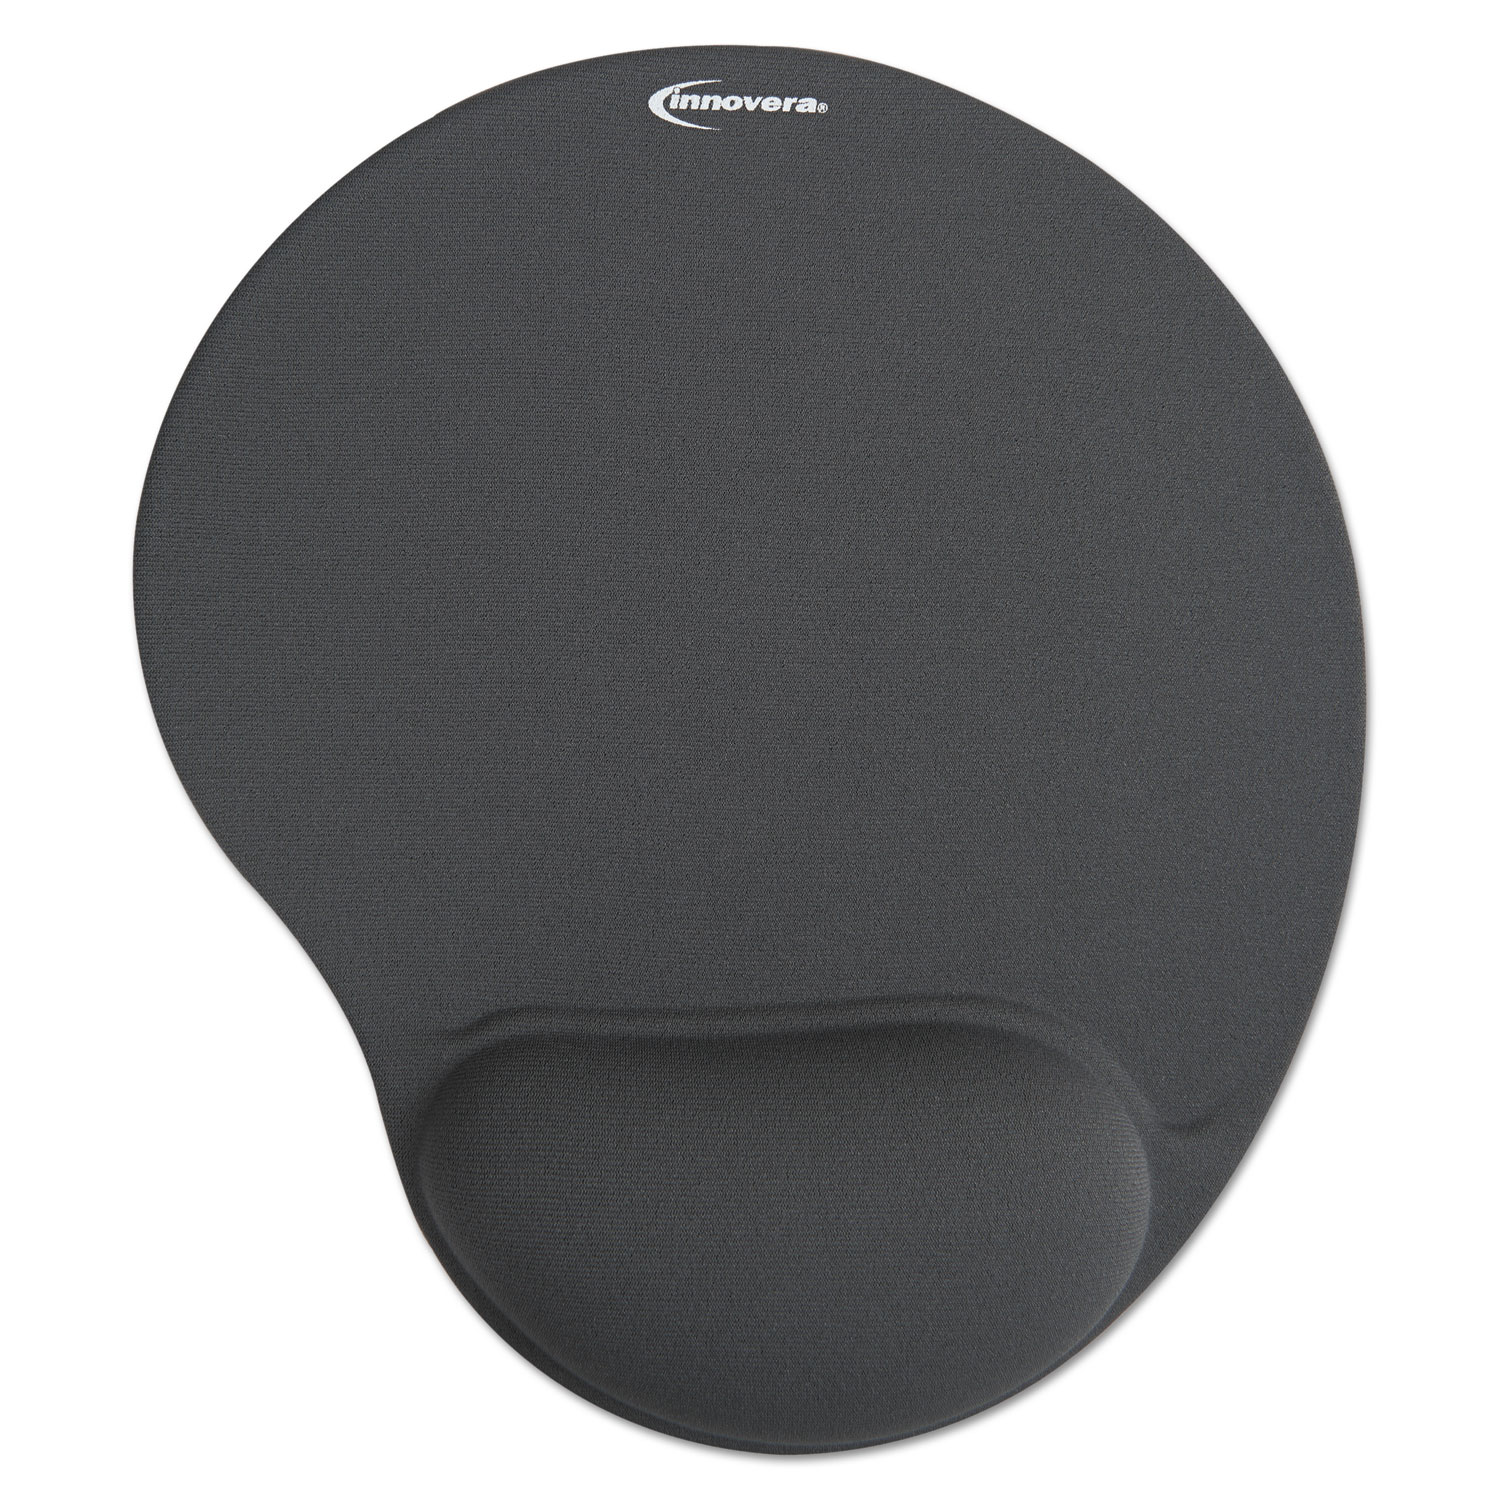  Innovera IVR50449 Mouse Pad w/Gel Wrist Pad, Nonskid Base, 10-3/8 x 8-7/8, Gray (IVR50449) 